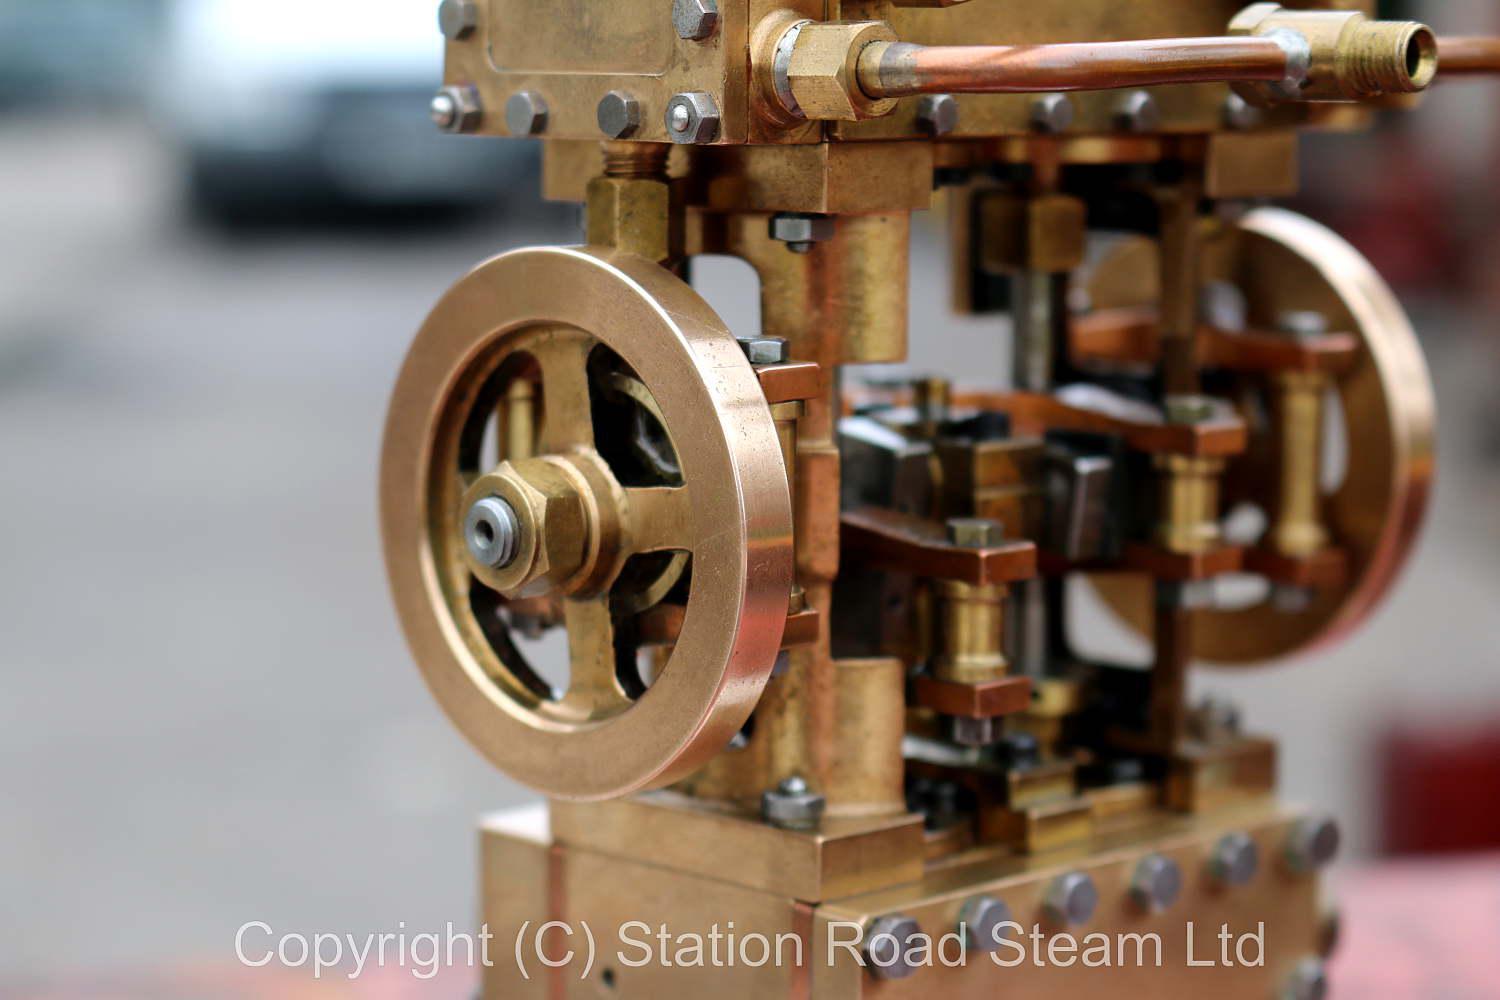 Merryweather steam pump